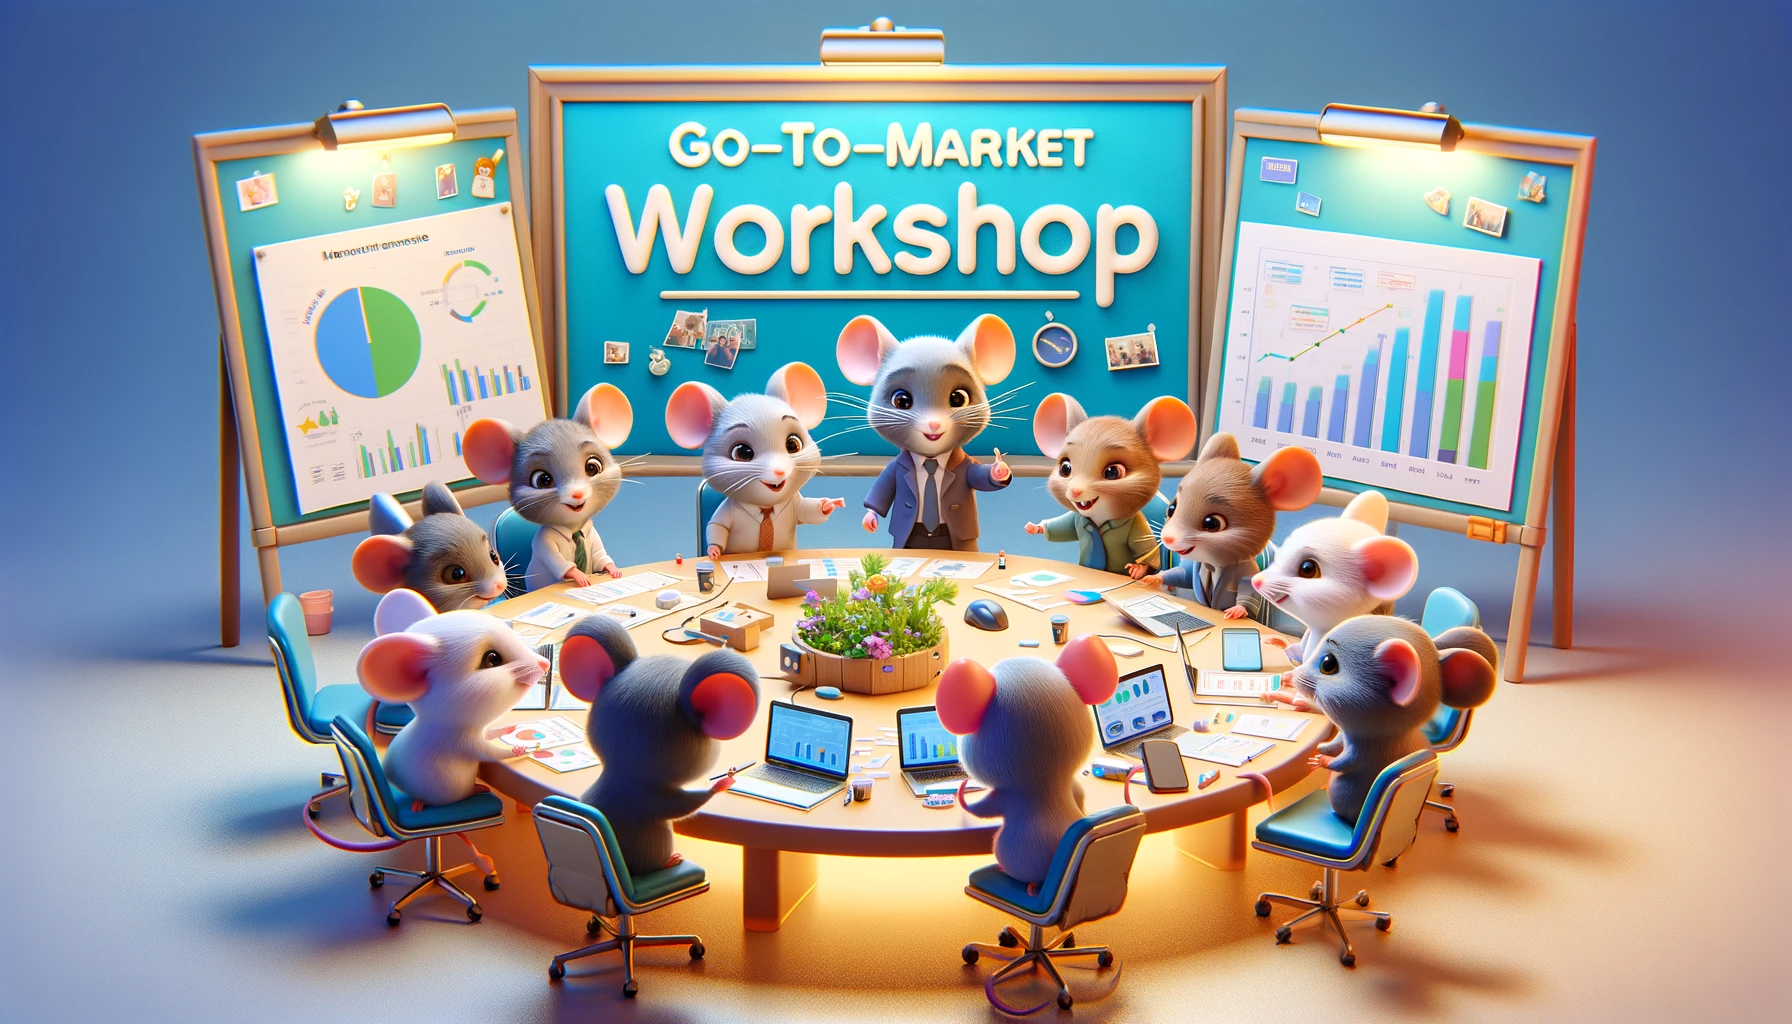 Go-to-Market Workshop